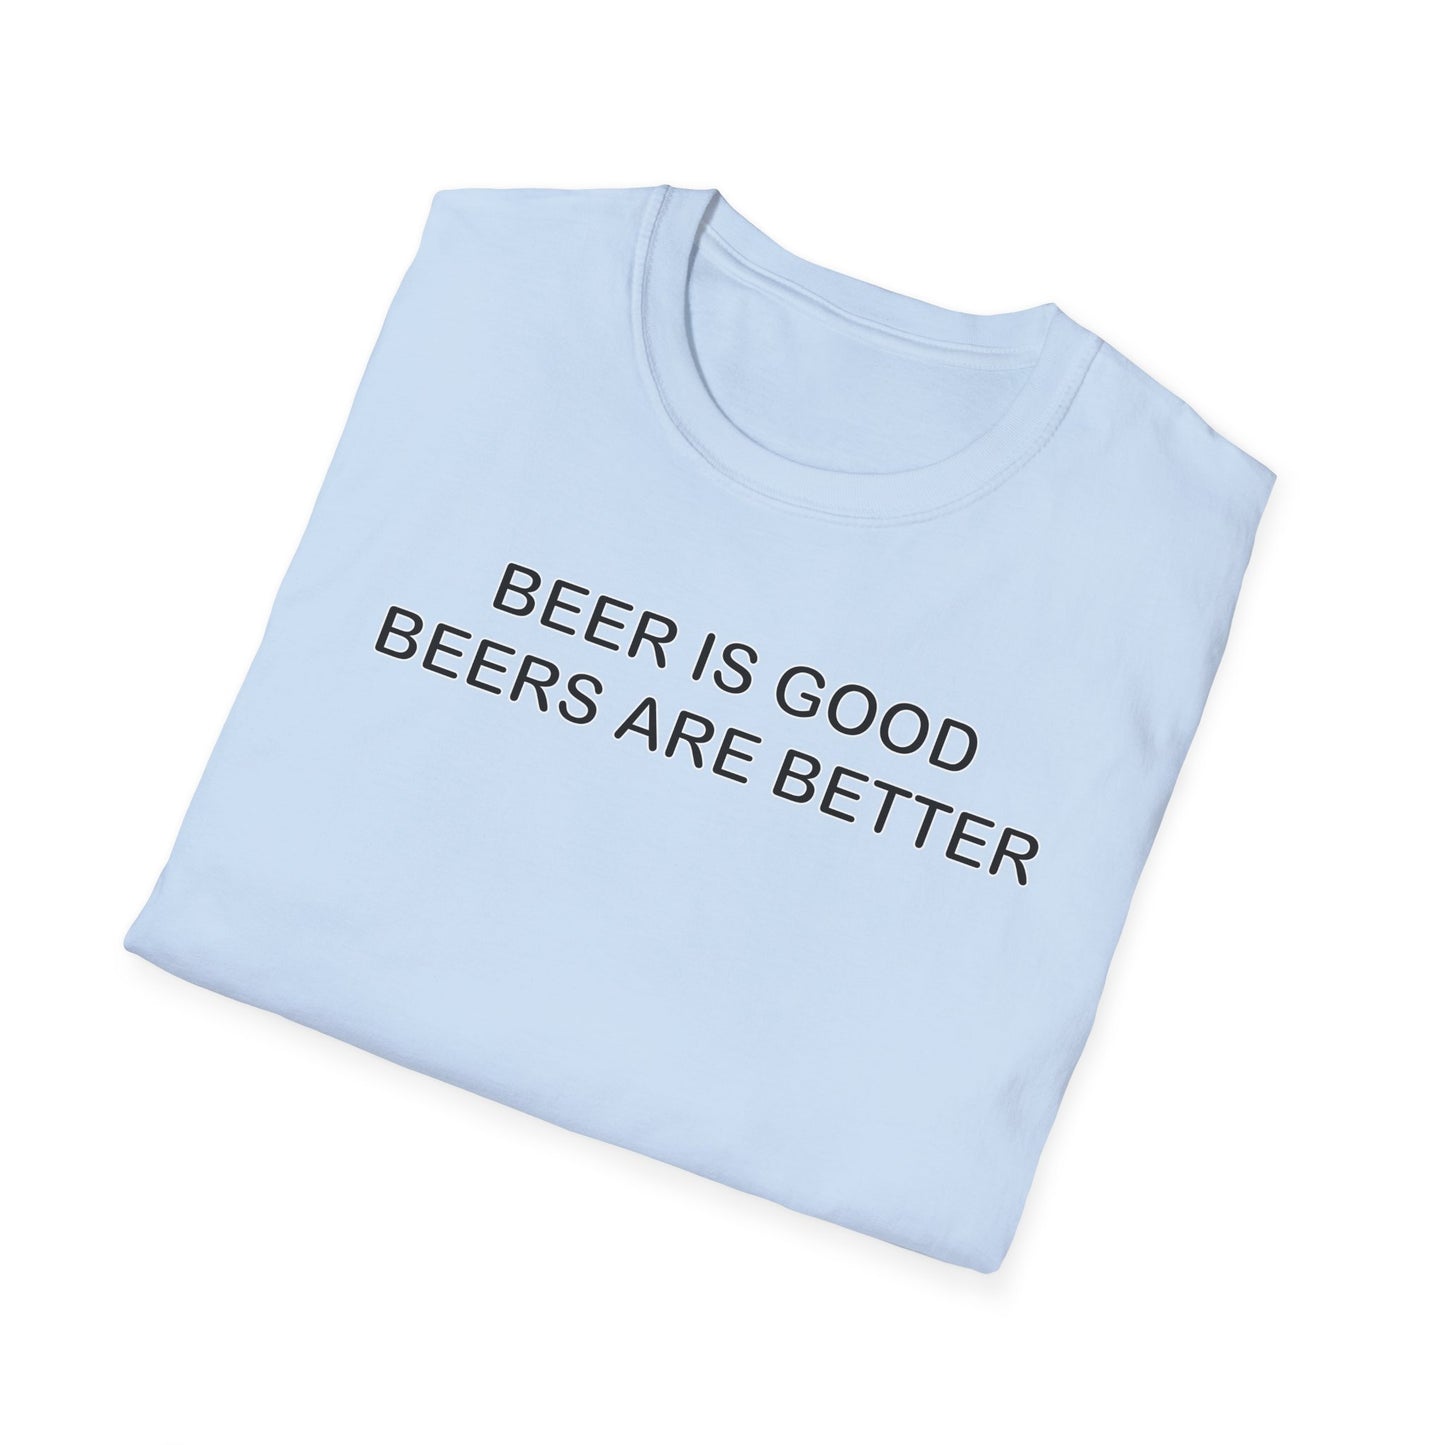 Beer is good, Beers are better